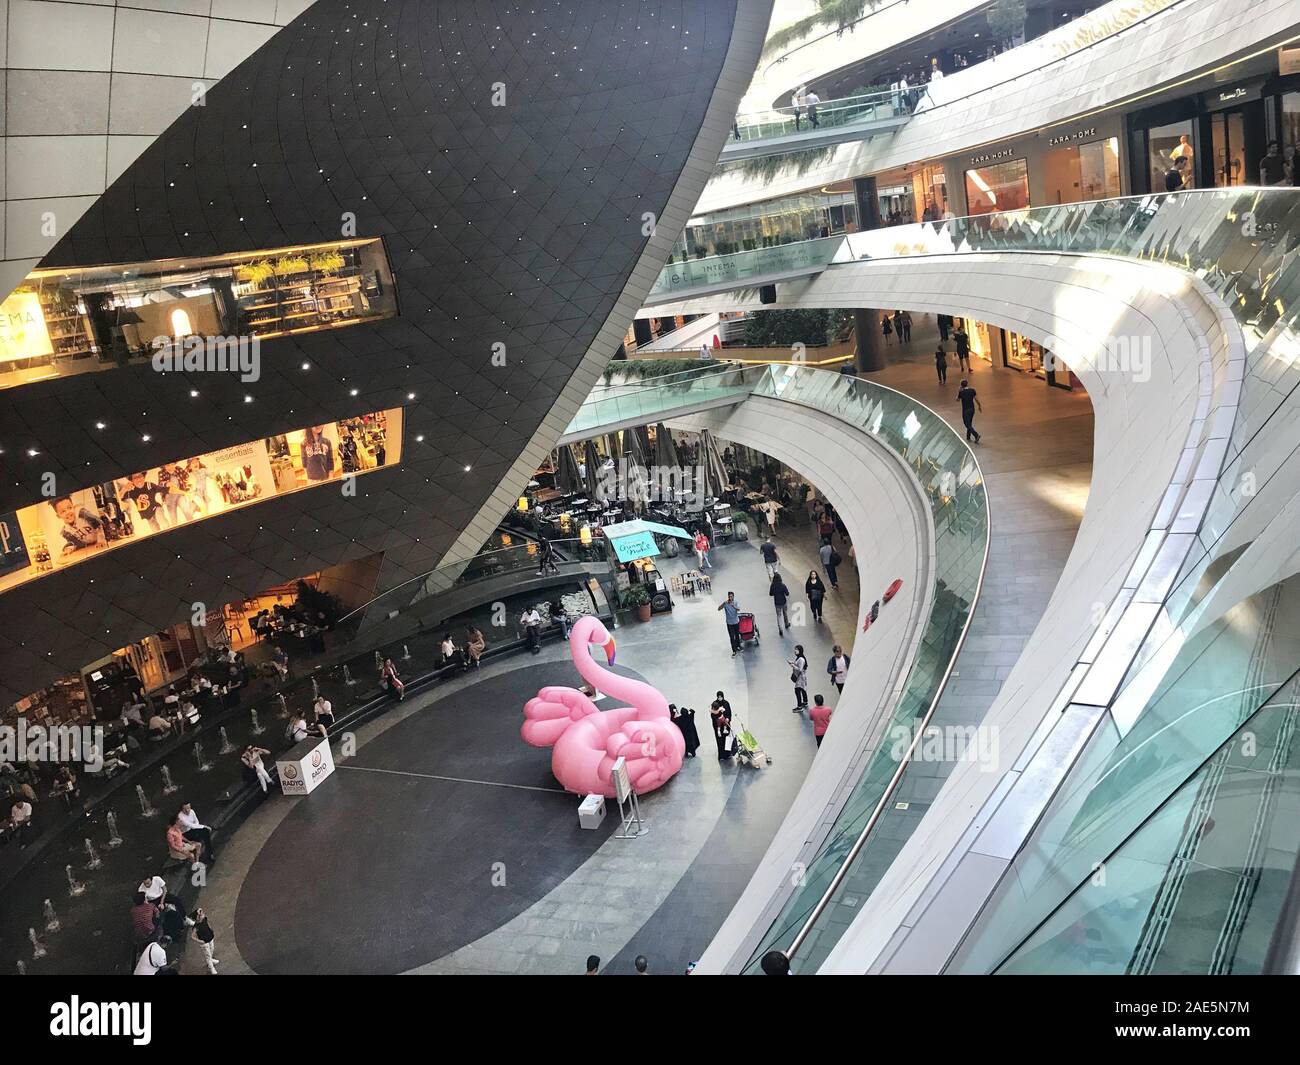 Kanyon Shopping Mall inside in Istanbul, Turkey Stock Photo - Alamy